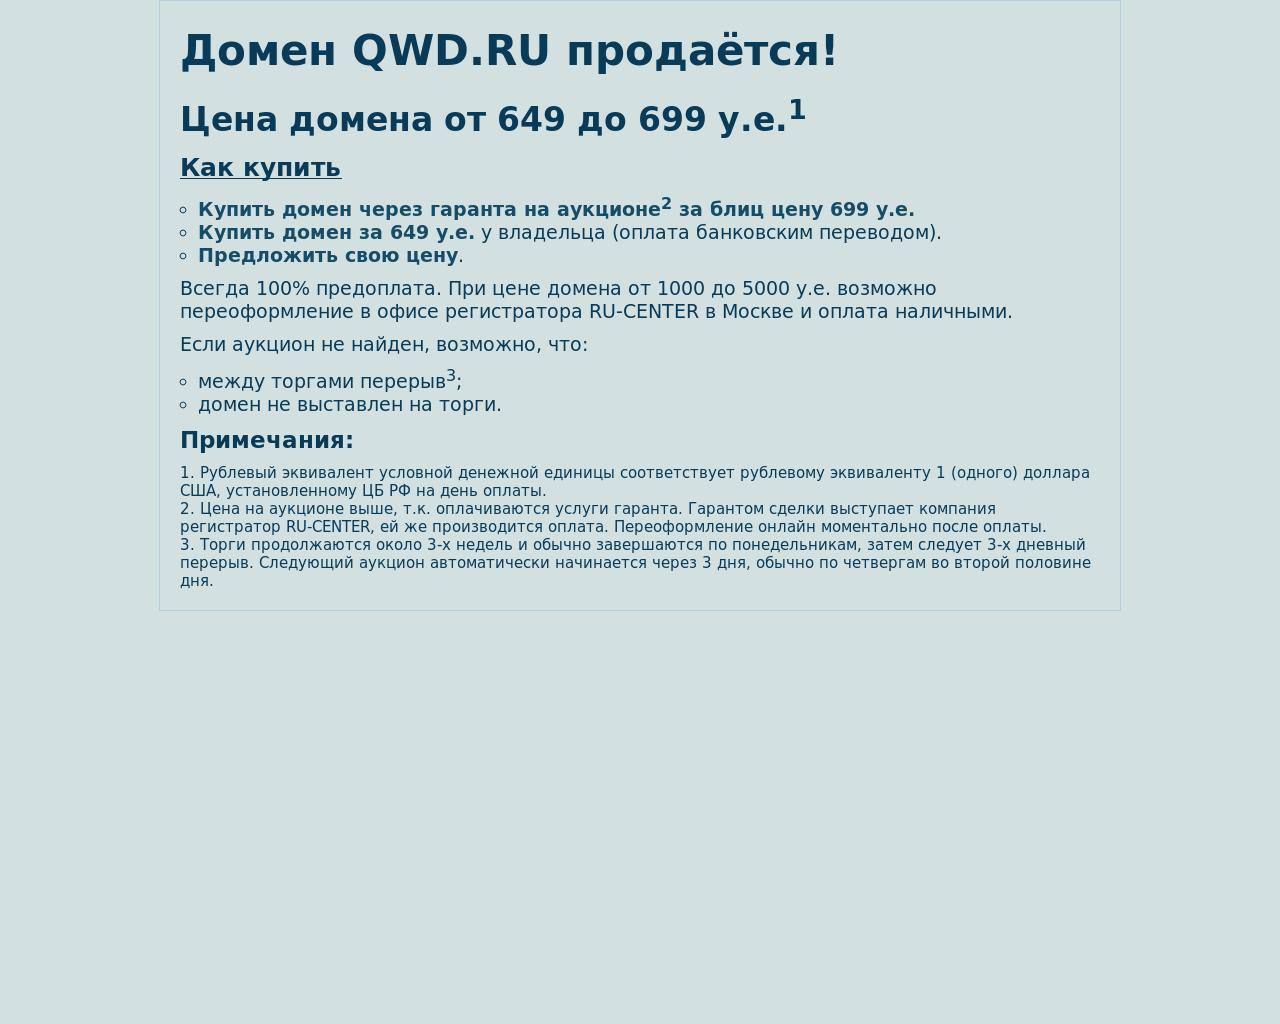 Изображение сайта qwd.ru в разрешении 1280x1024